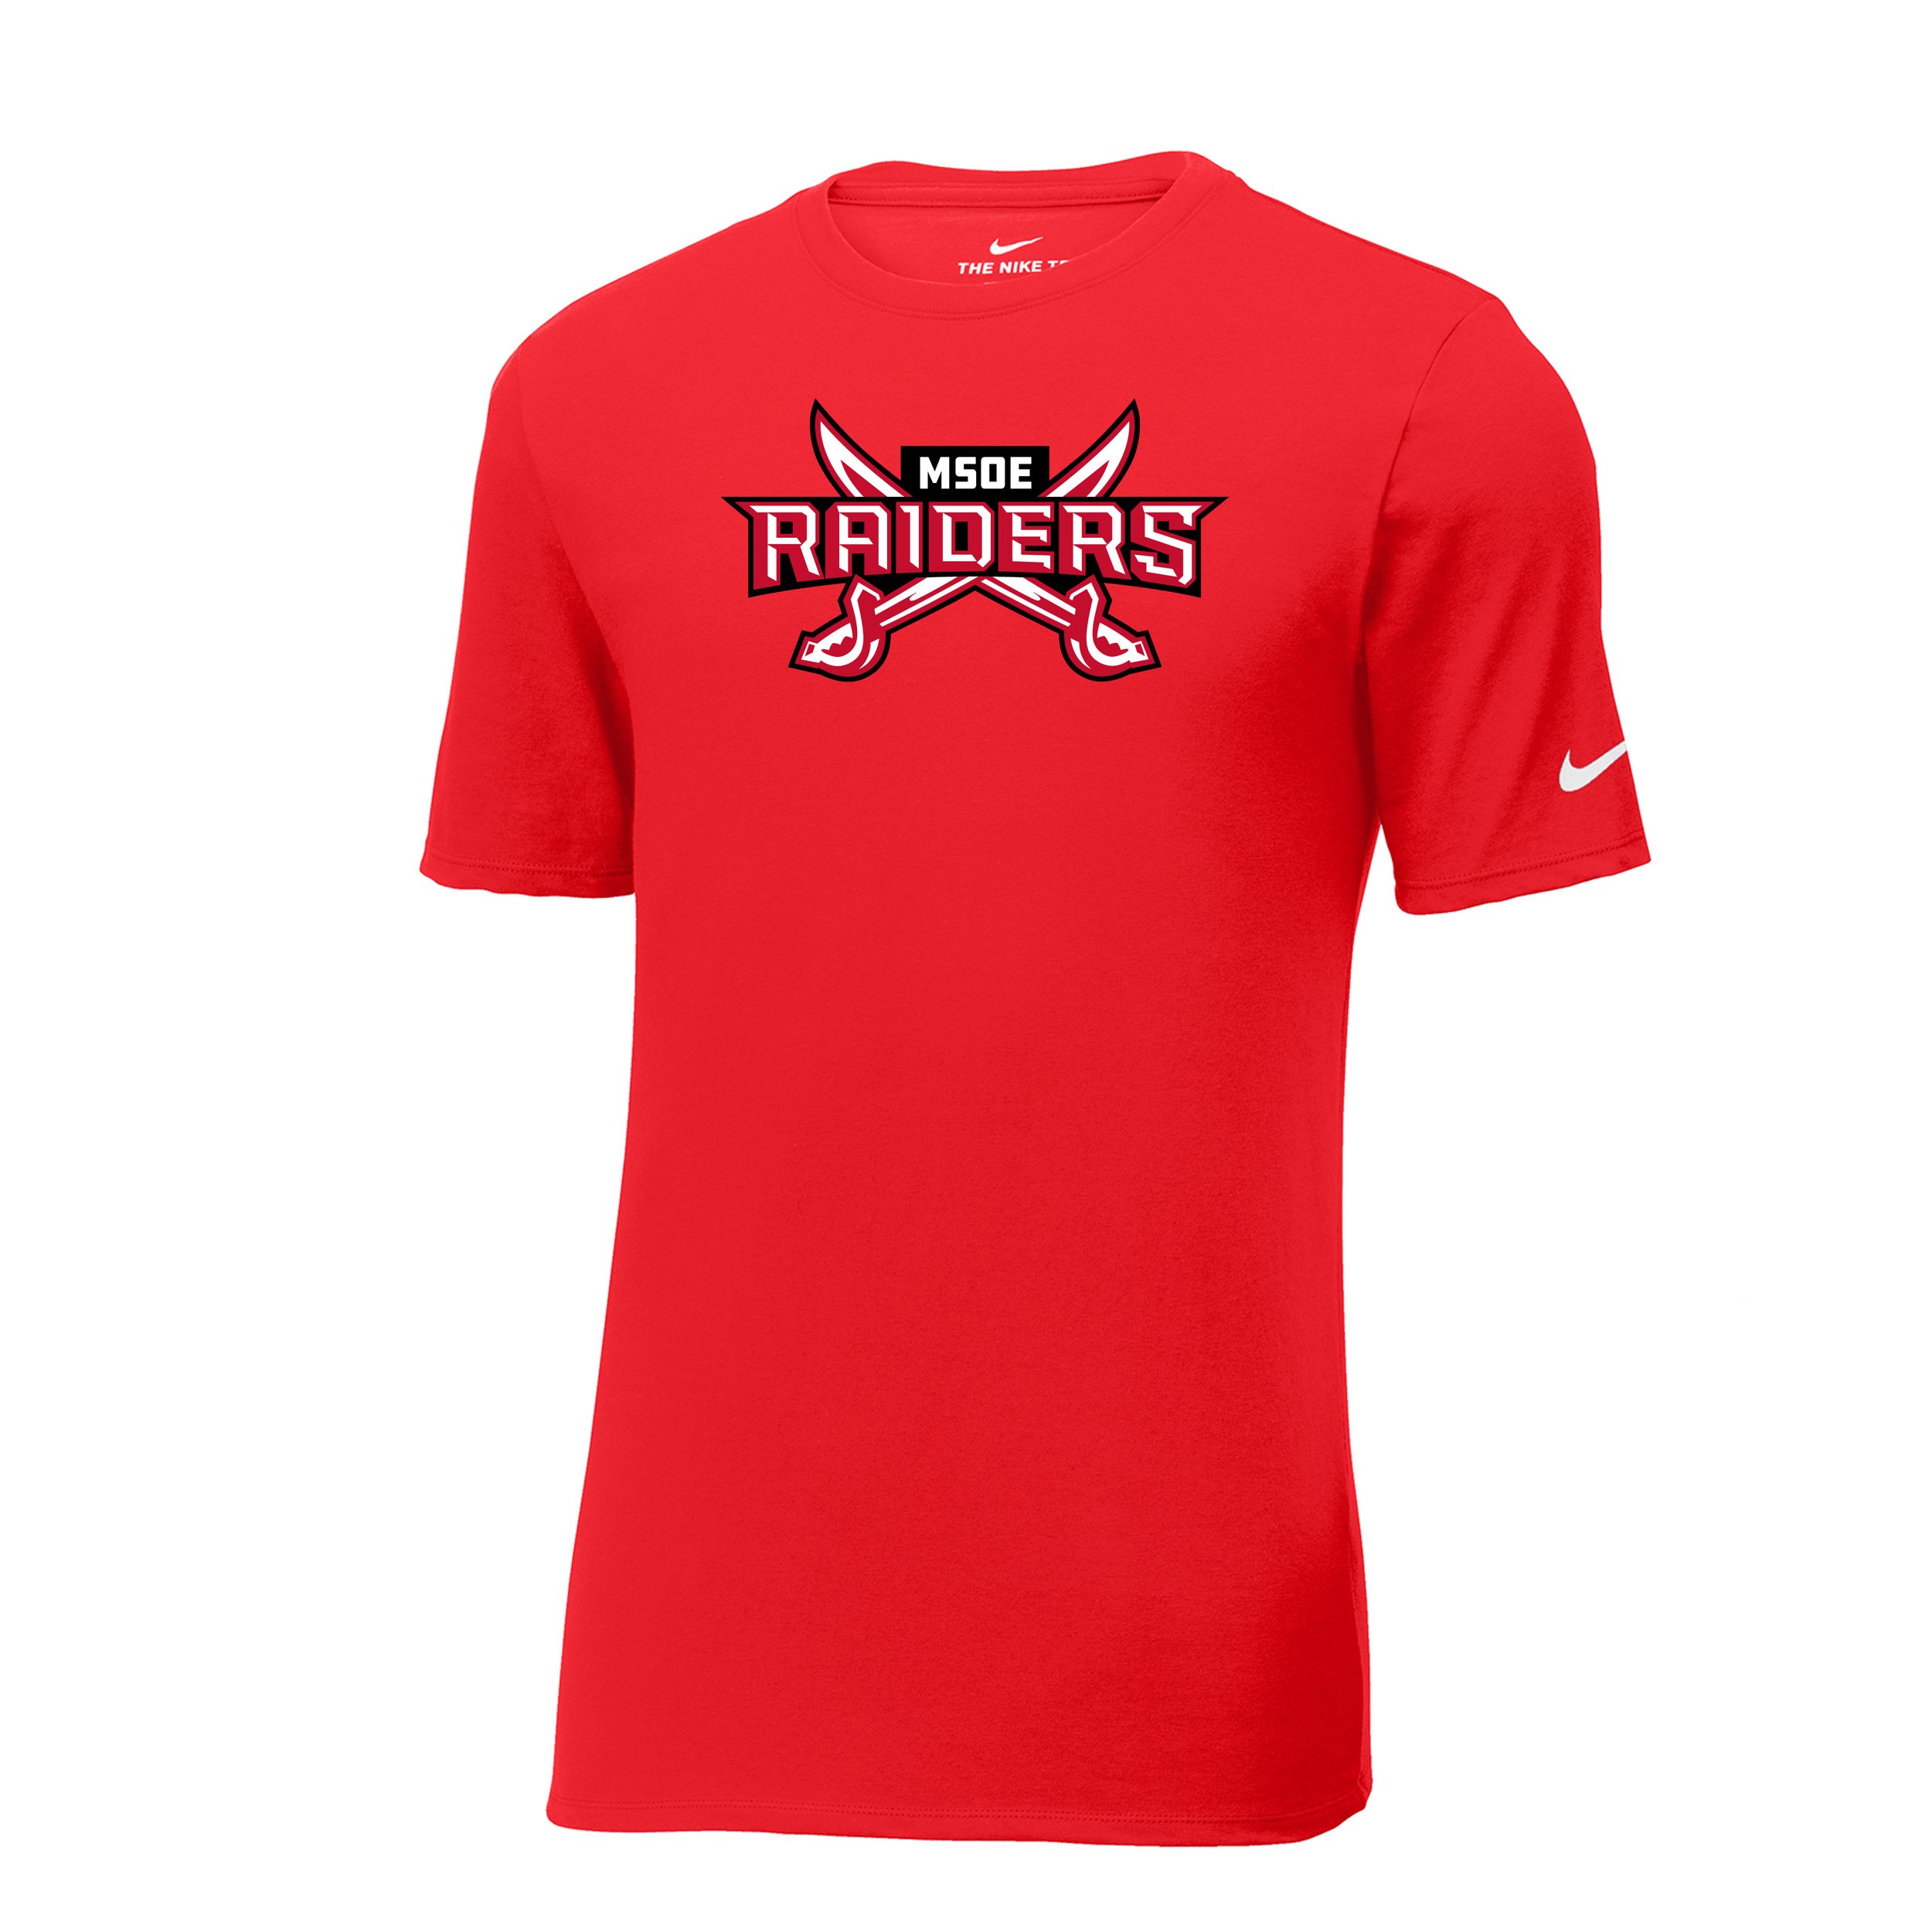 contrabando Chelín futuro MSOE Volleyball Nike raiders tee (cotton) — T Shirts Your Way